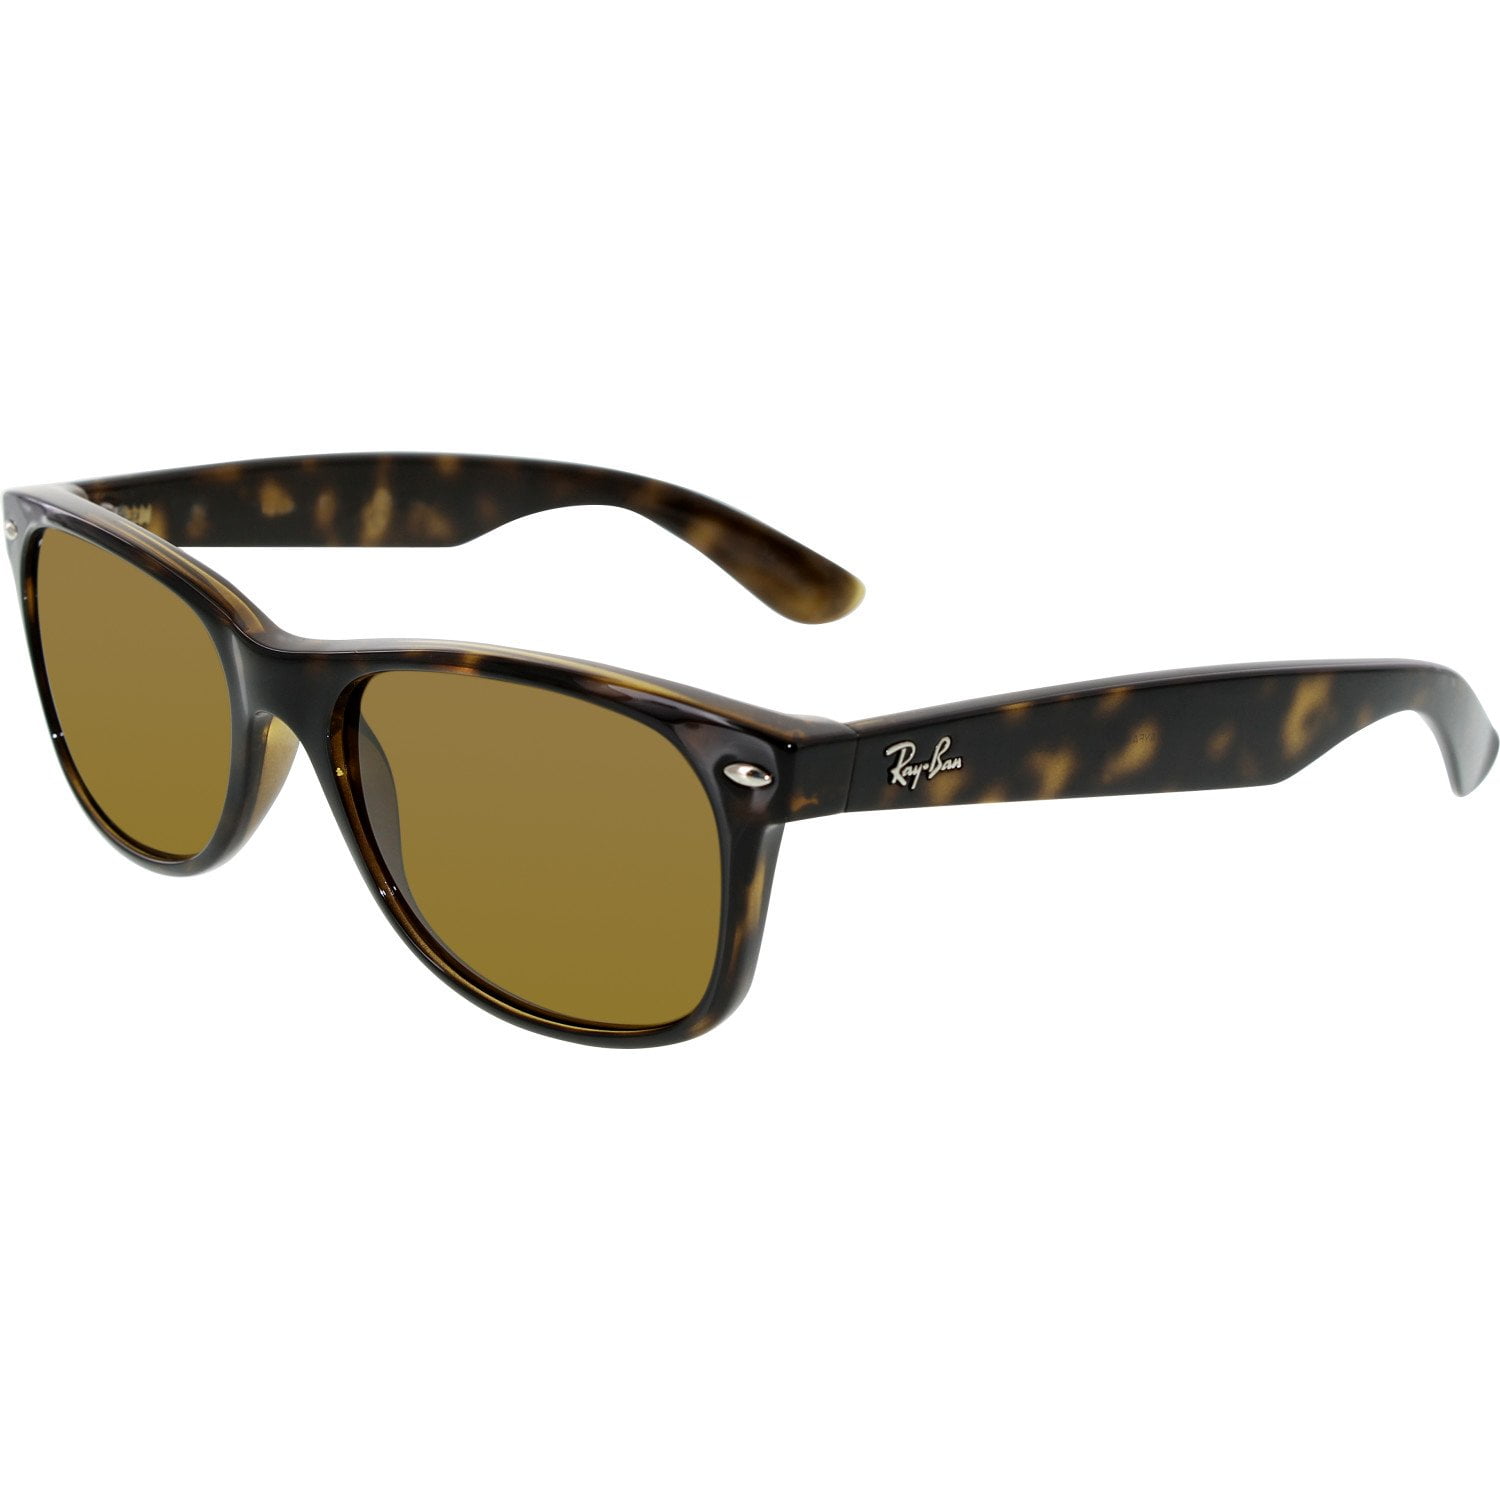 Shopping With Unbeatable Price Sunglasses Ray Banwomens Sunglasses Rb2132 New Wayfarer